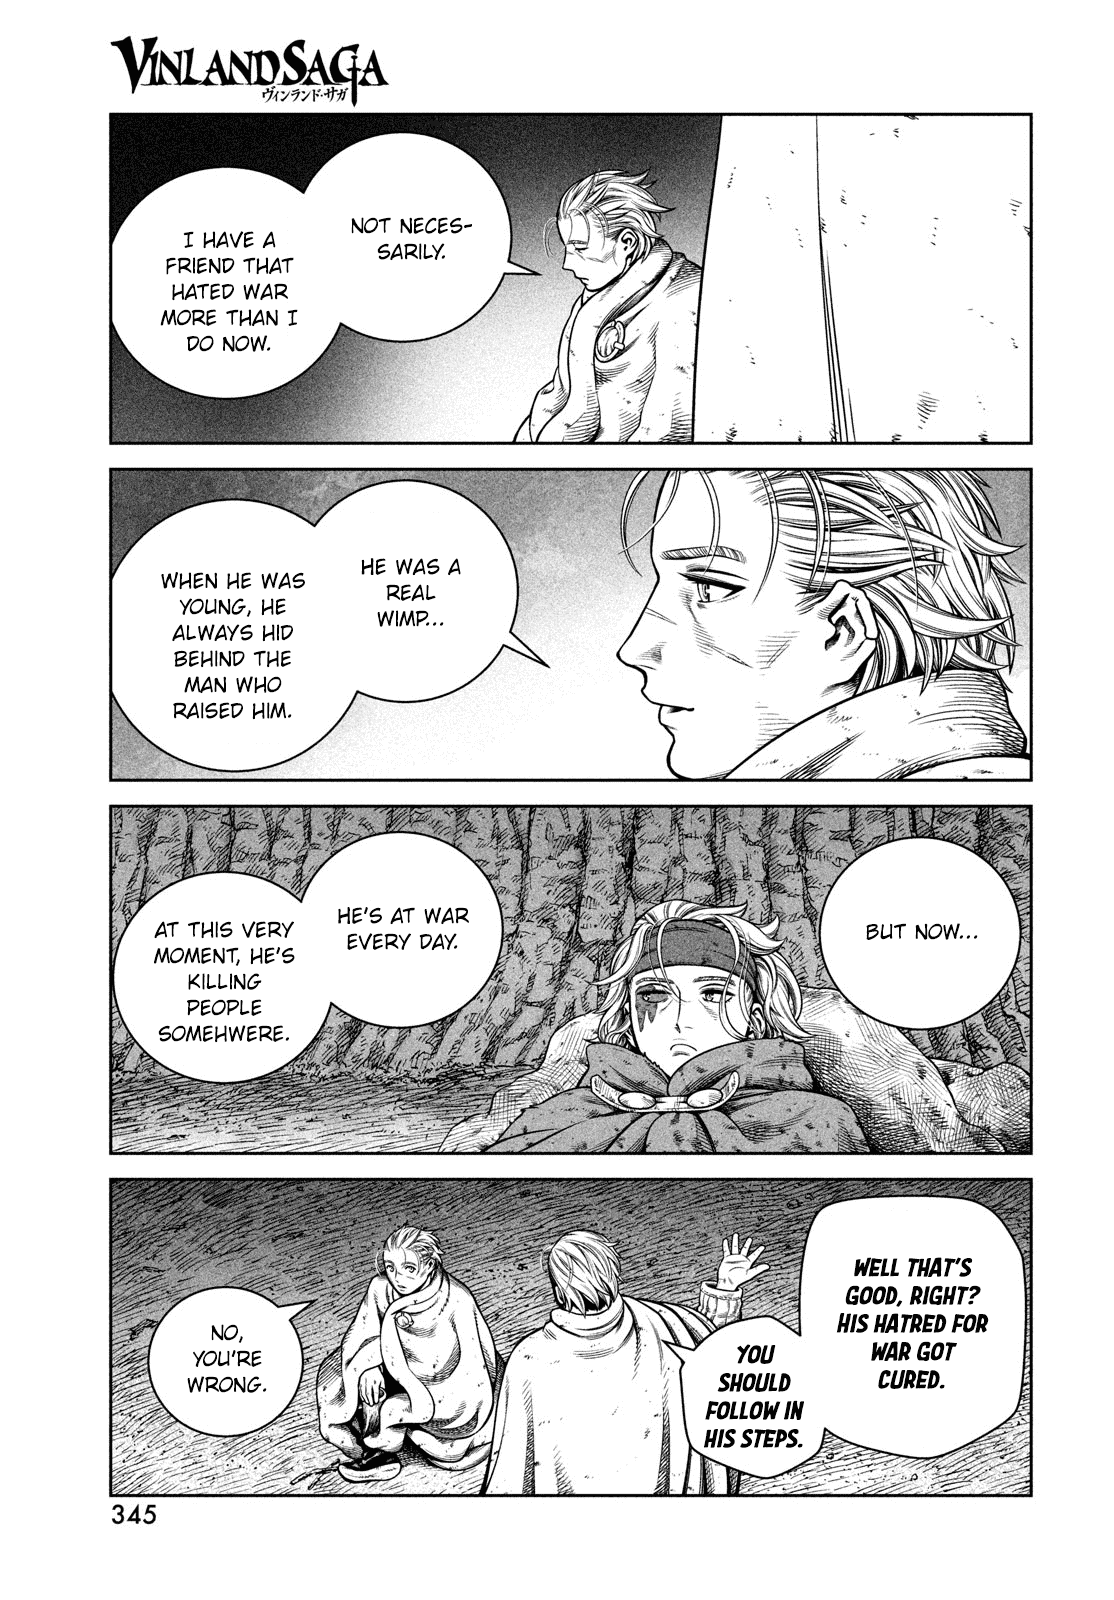 Vinland Saga Manga Manga Chapter - 182 - image 12